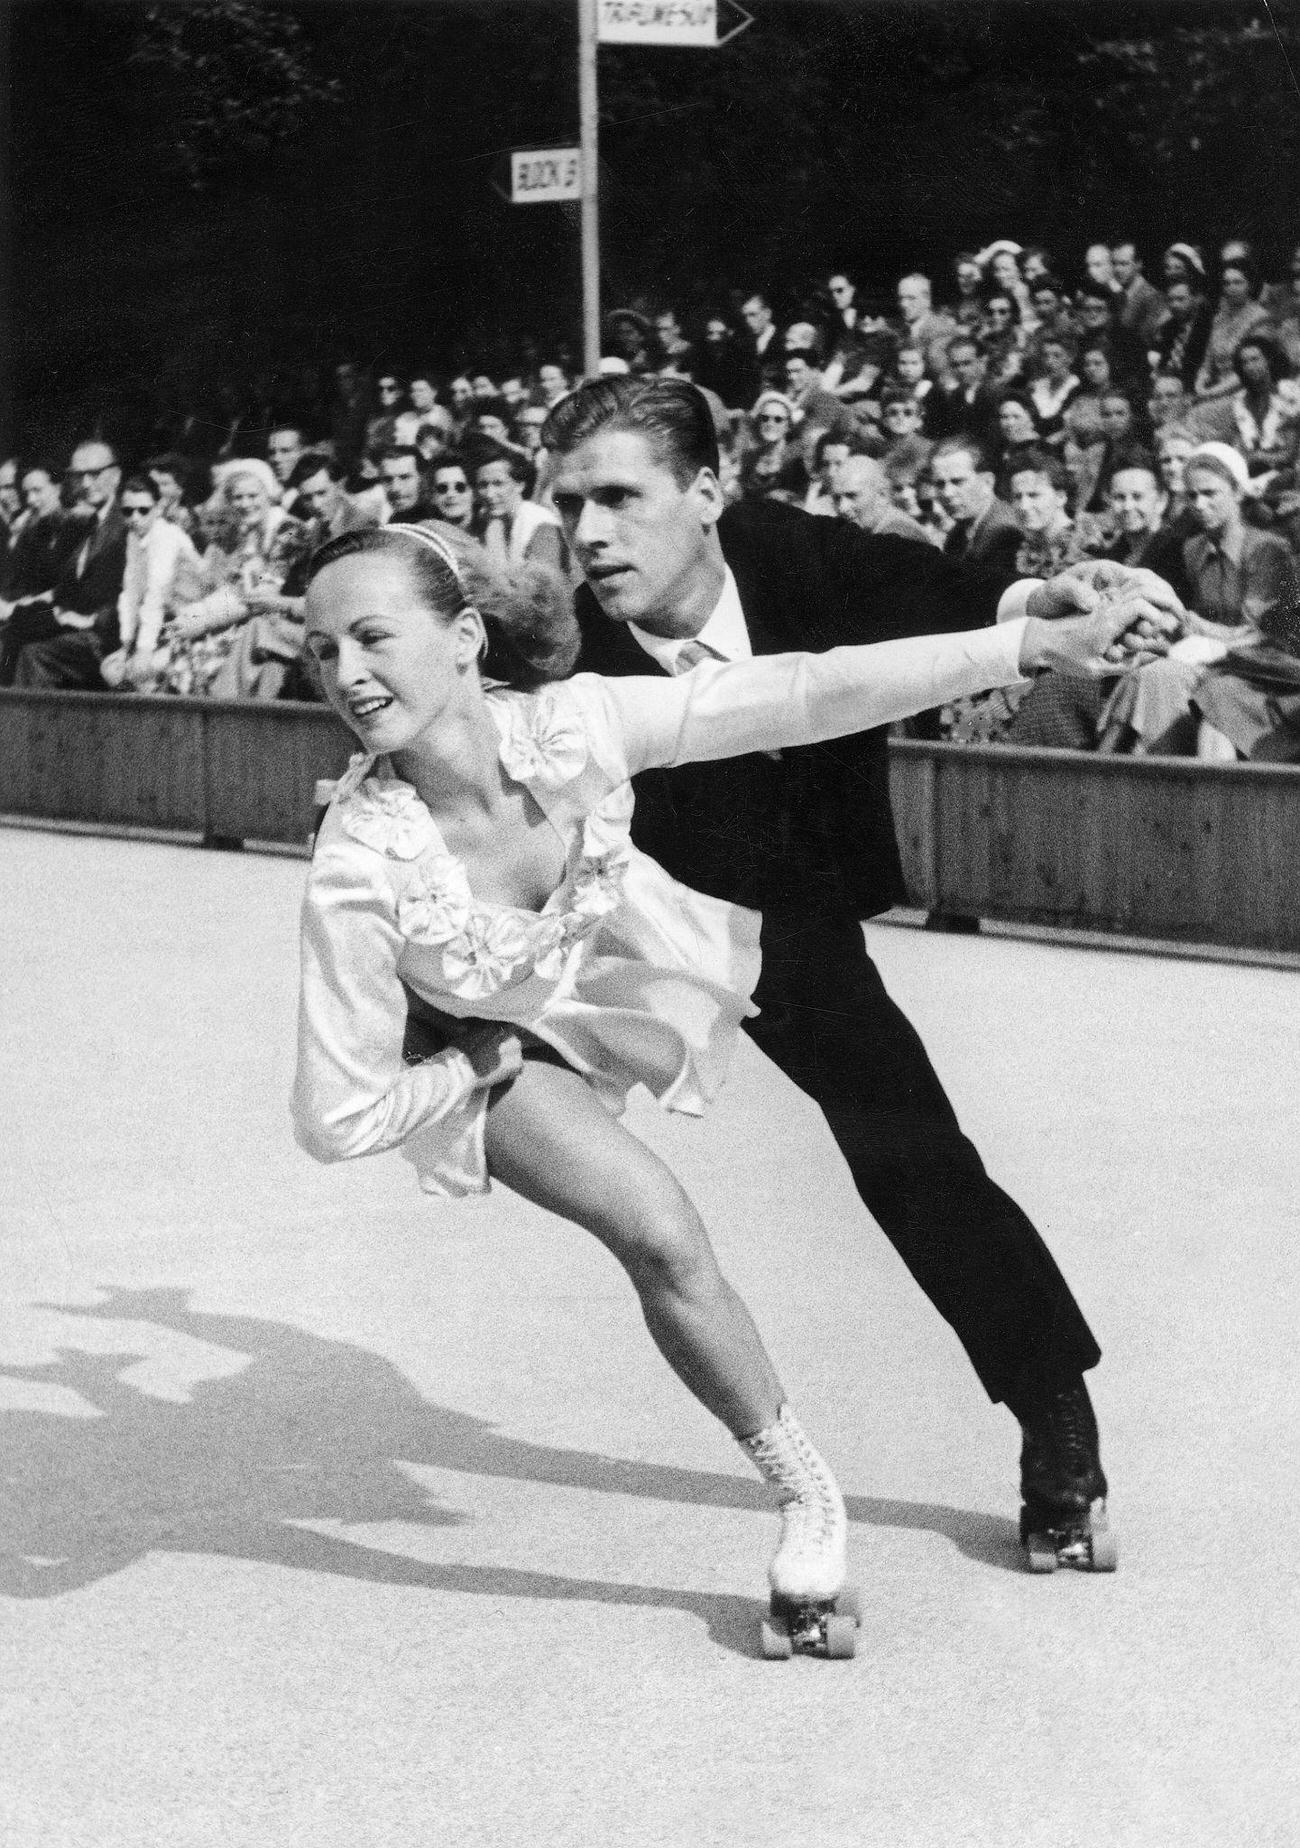 Falk, Ria and Paul, German Figure Skating Olympians, Pair Skating on Roller Skates, 1951